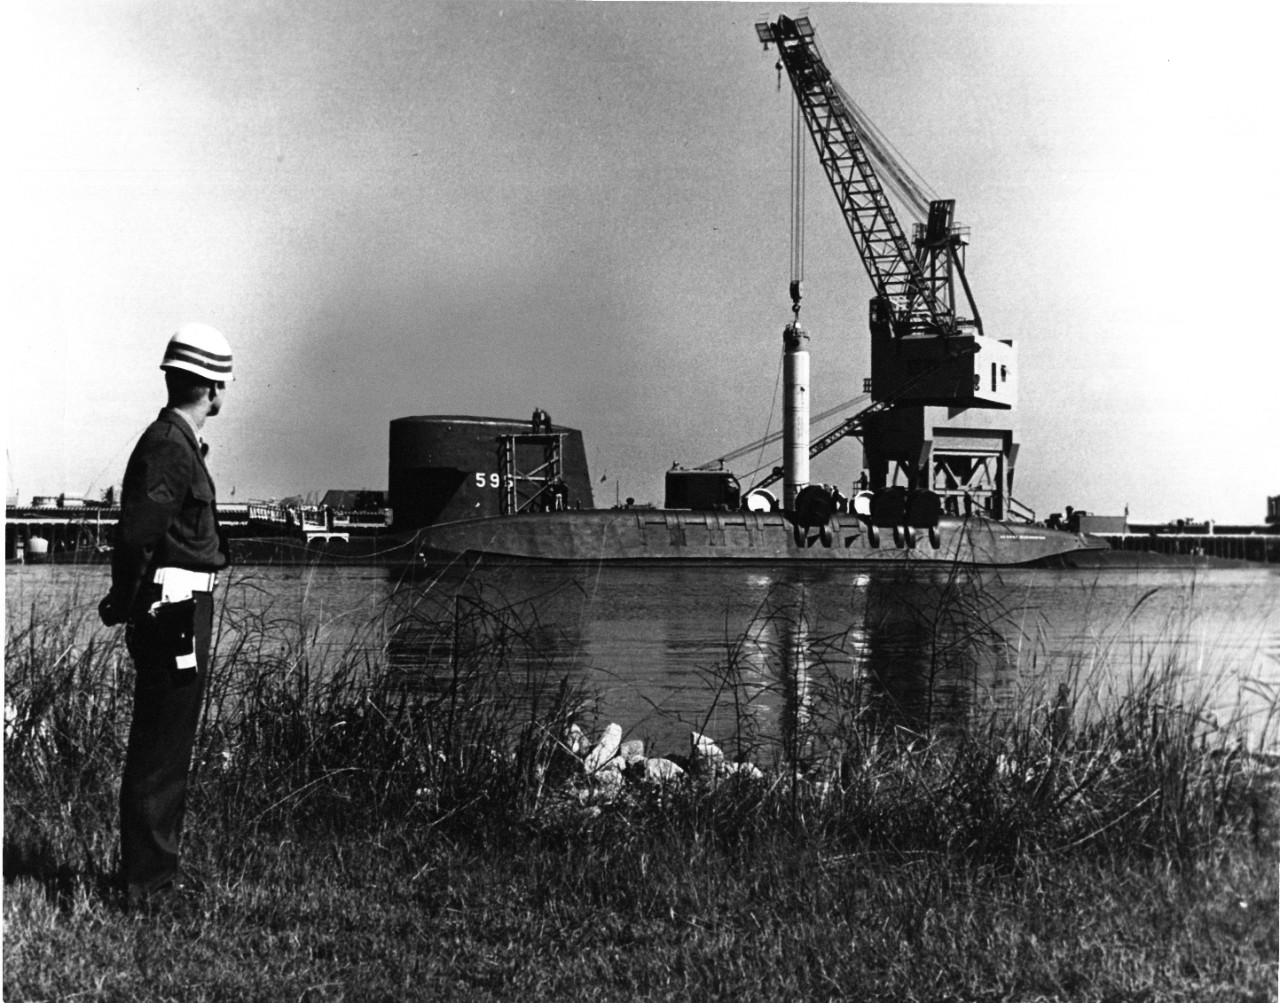 Crane lowers missile into submarine